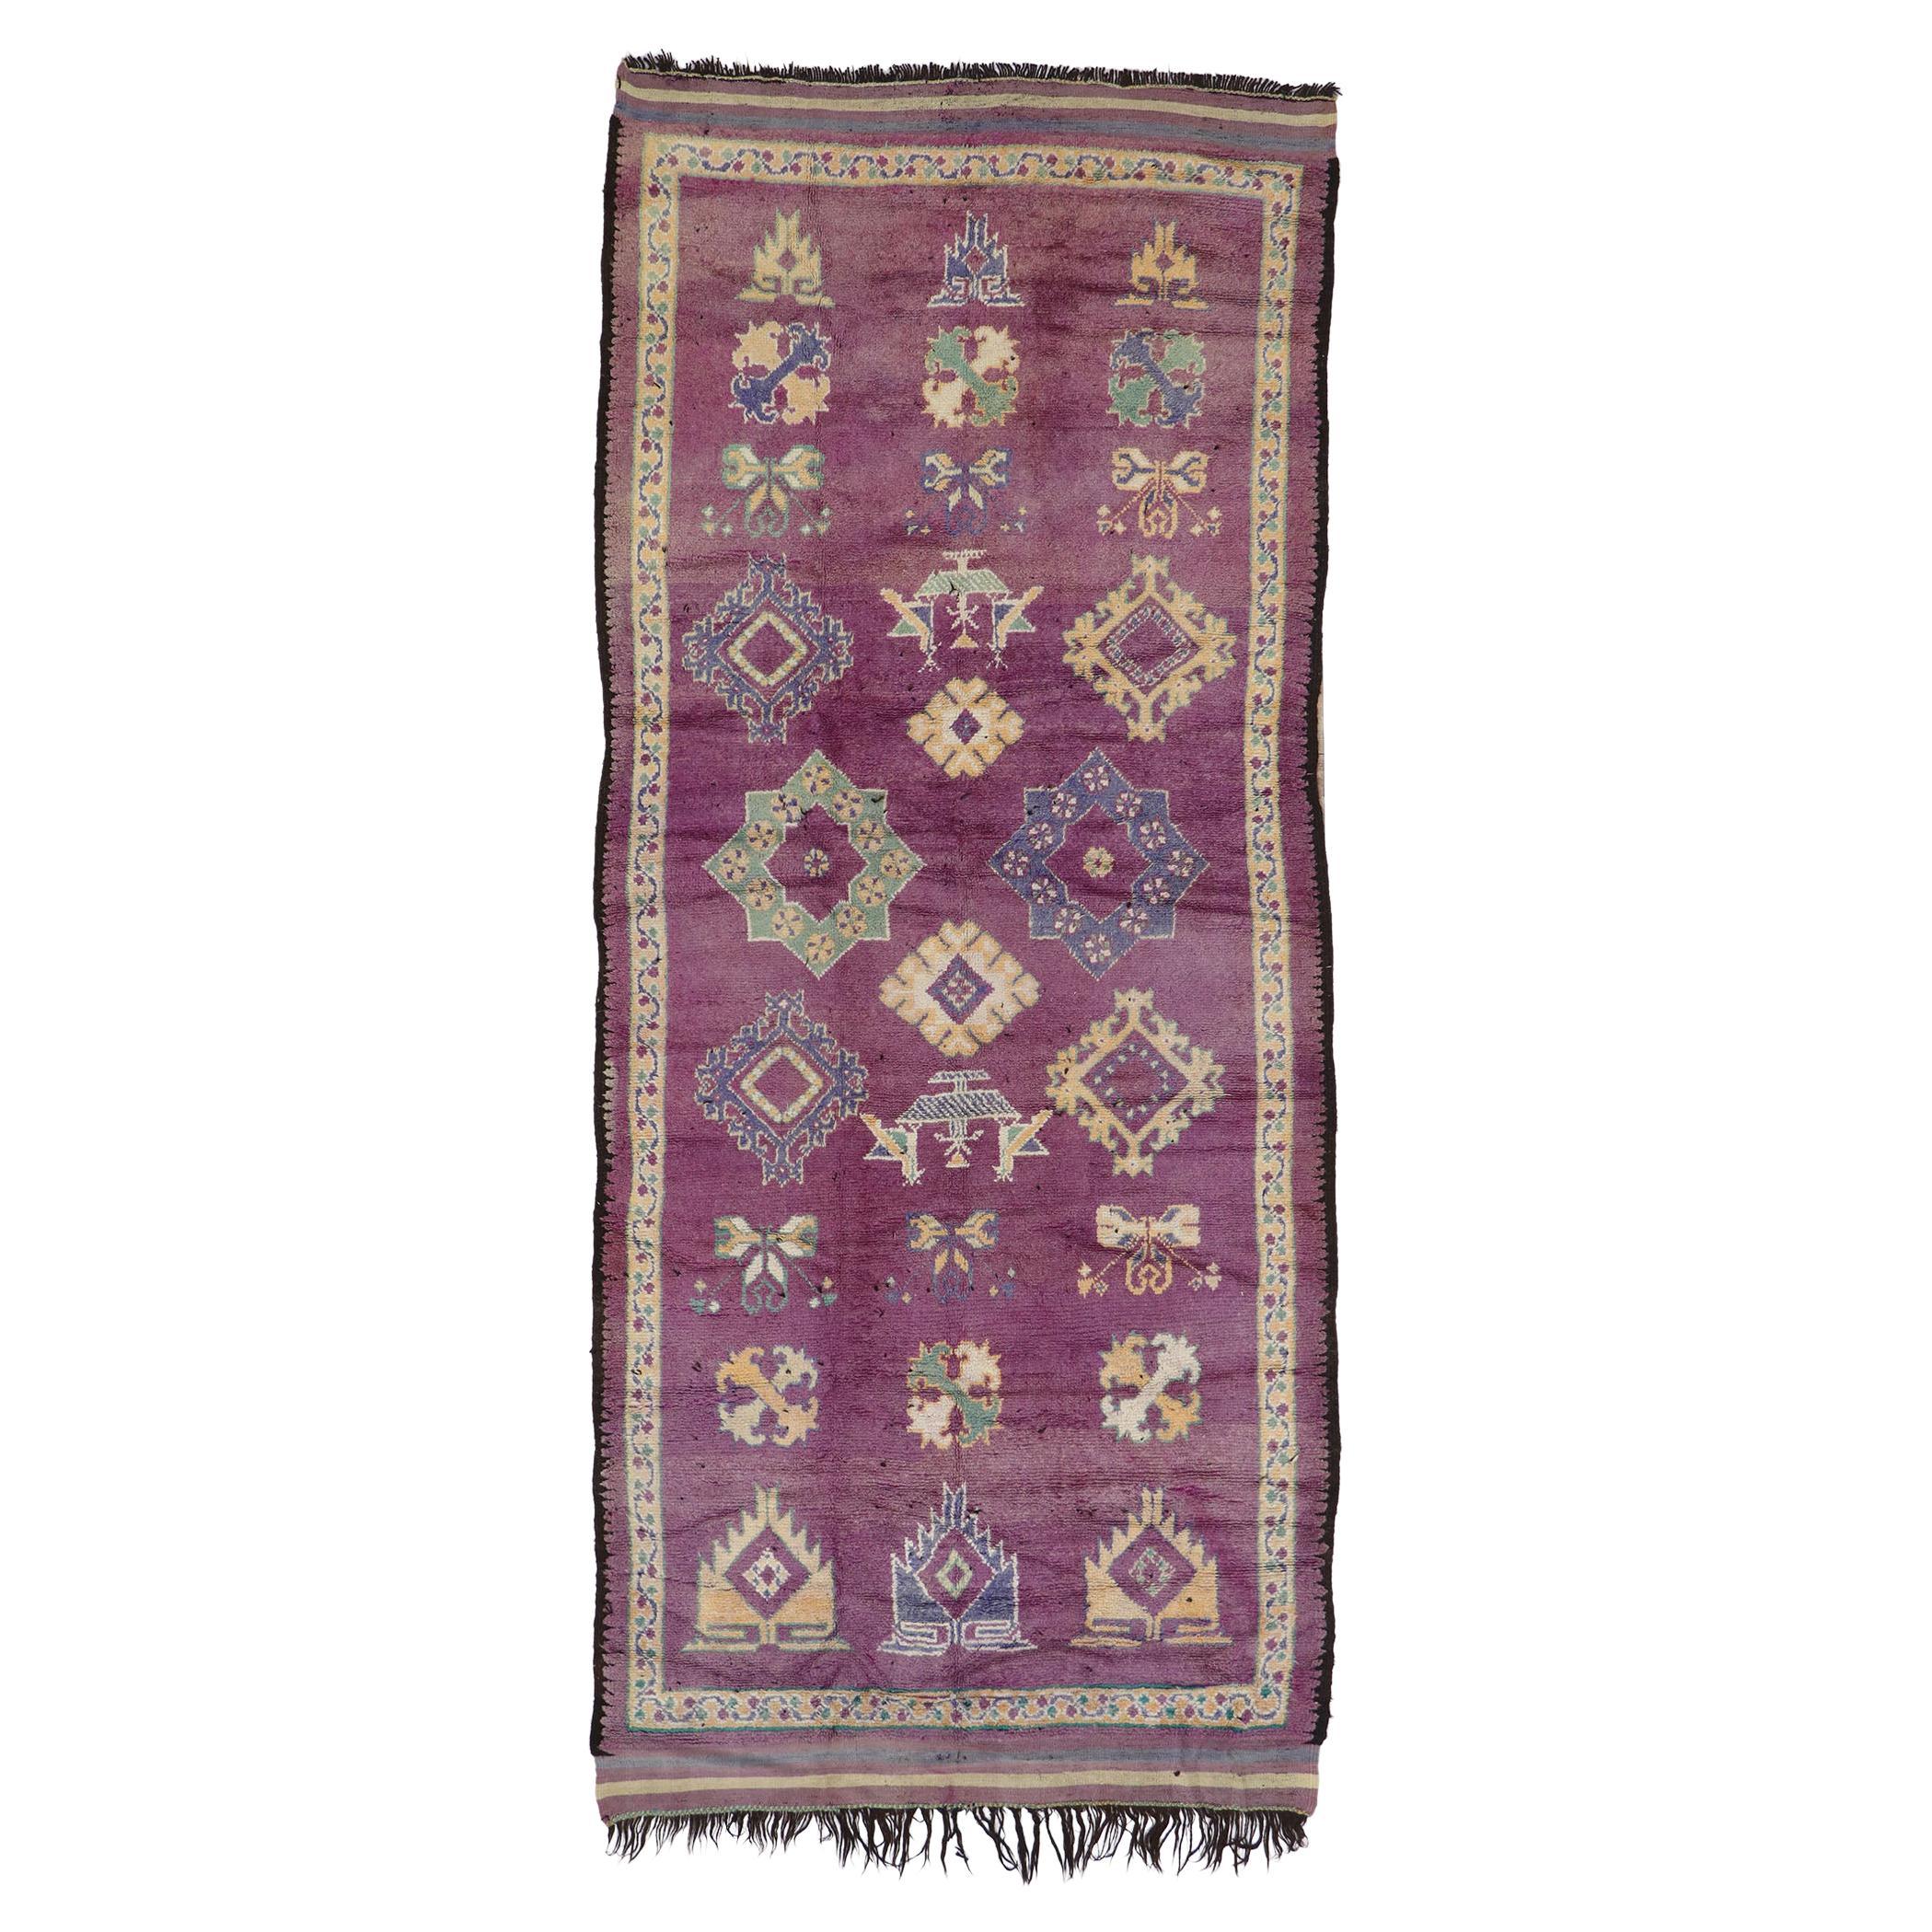 Vintage Purple Boujad Moroccan Rug with Boho Chic Tribal Style